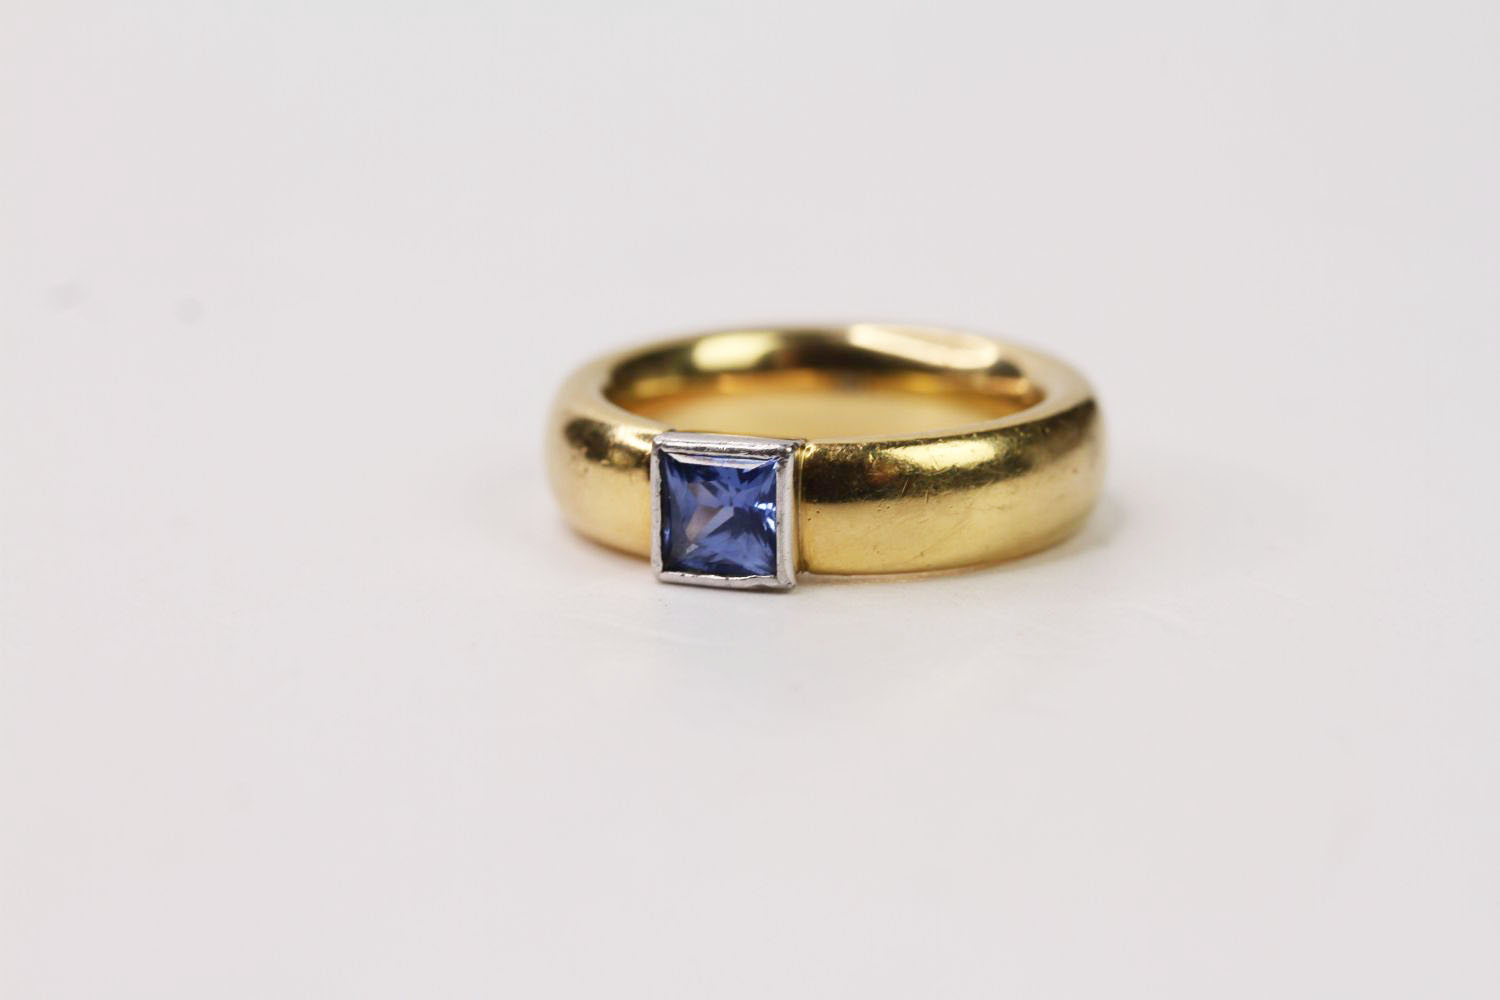 PRINCESS CUT CEYLON SAPPHIRE 18CT RING, set with one 0.80 carat Ceylon Sapphire, set in Platinum,